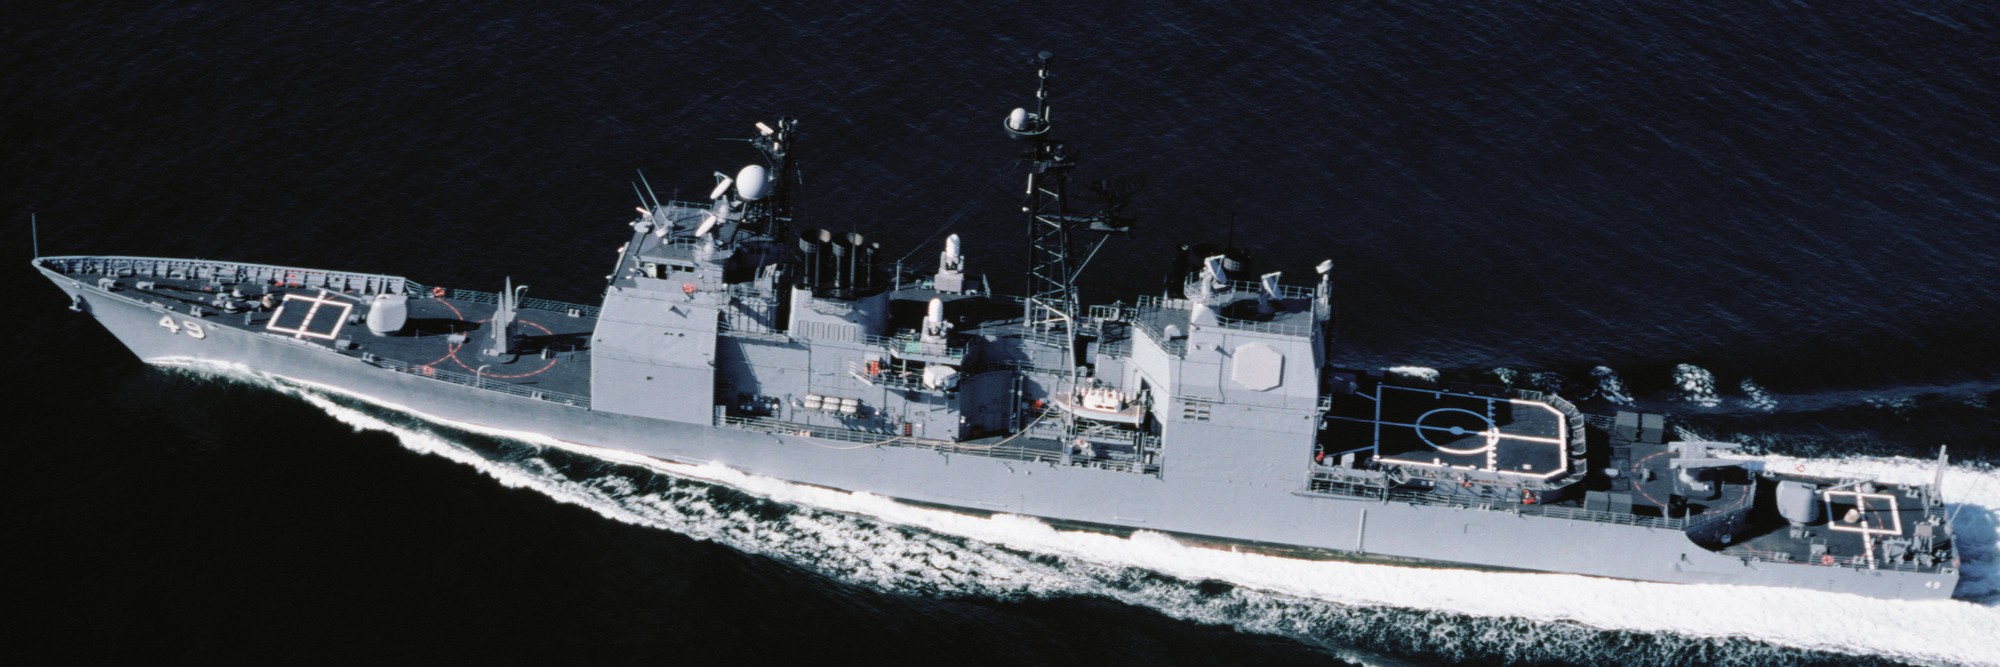 cg-49 uss vincennes ticonderoga class guided missile cruiser aegis us navy 45